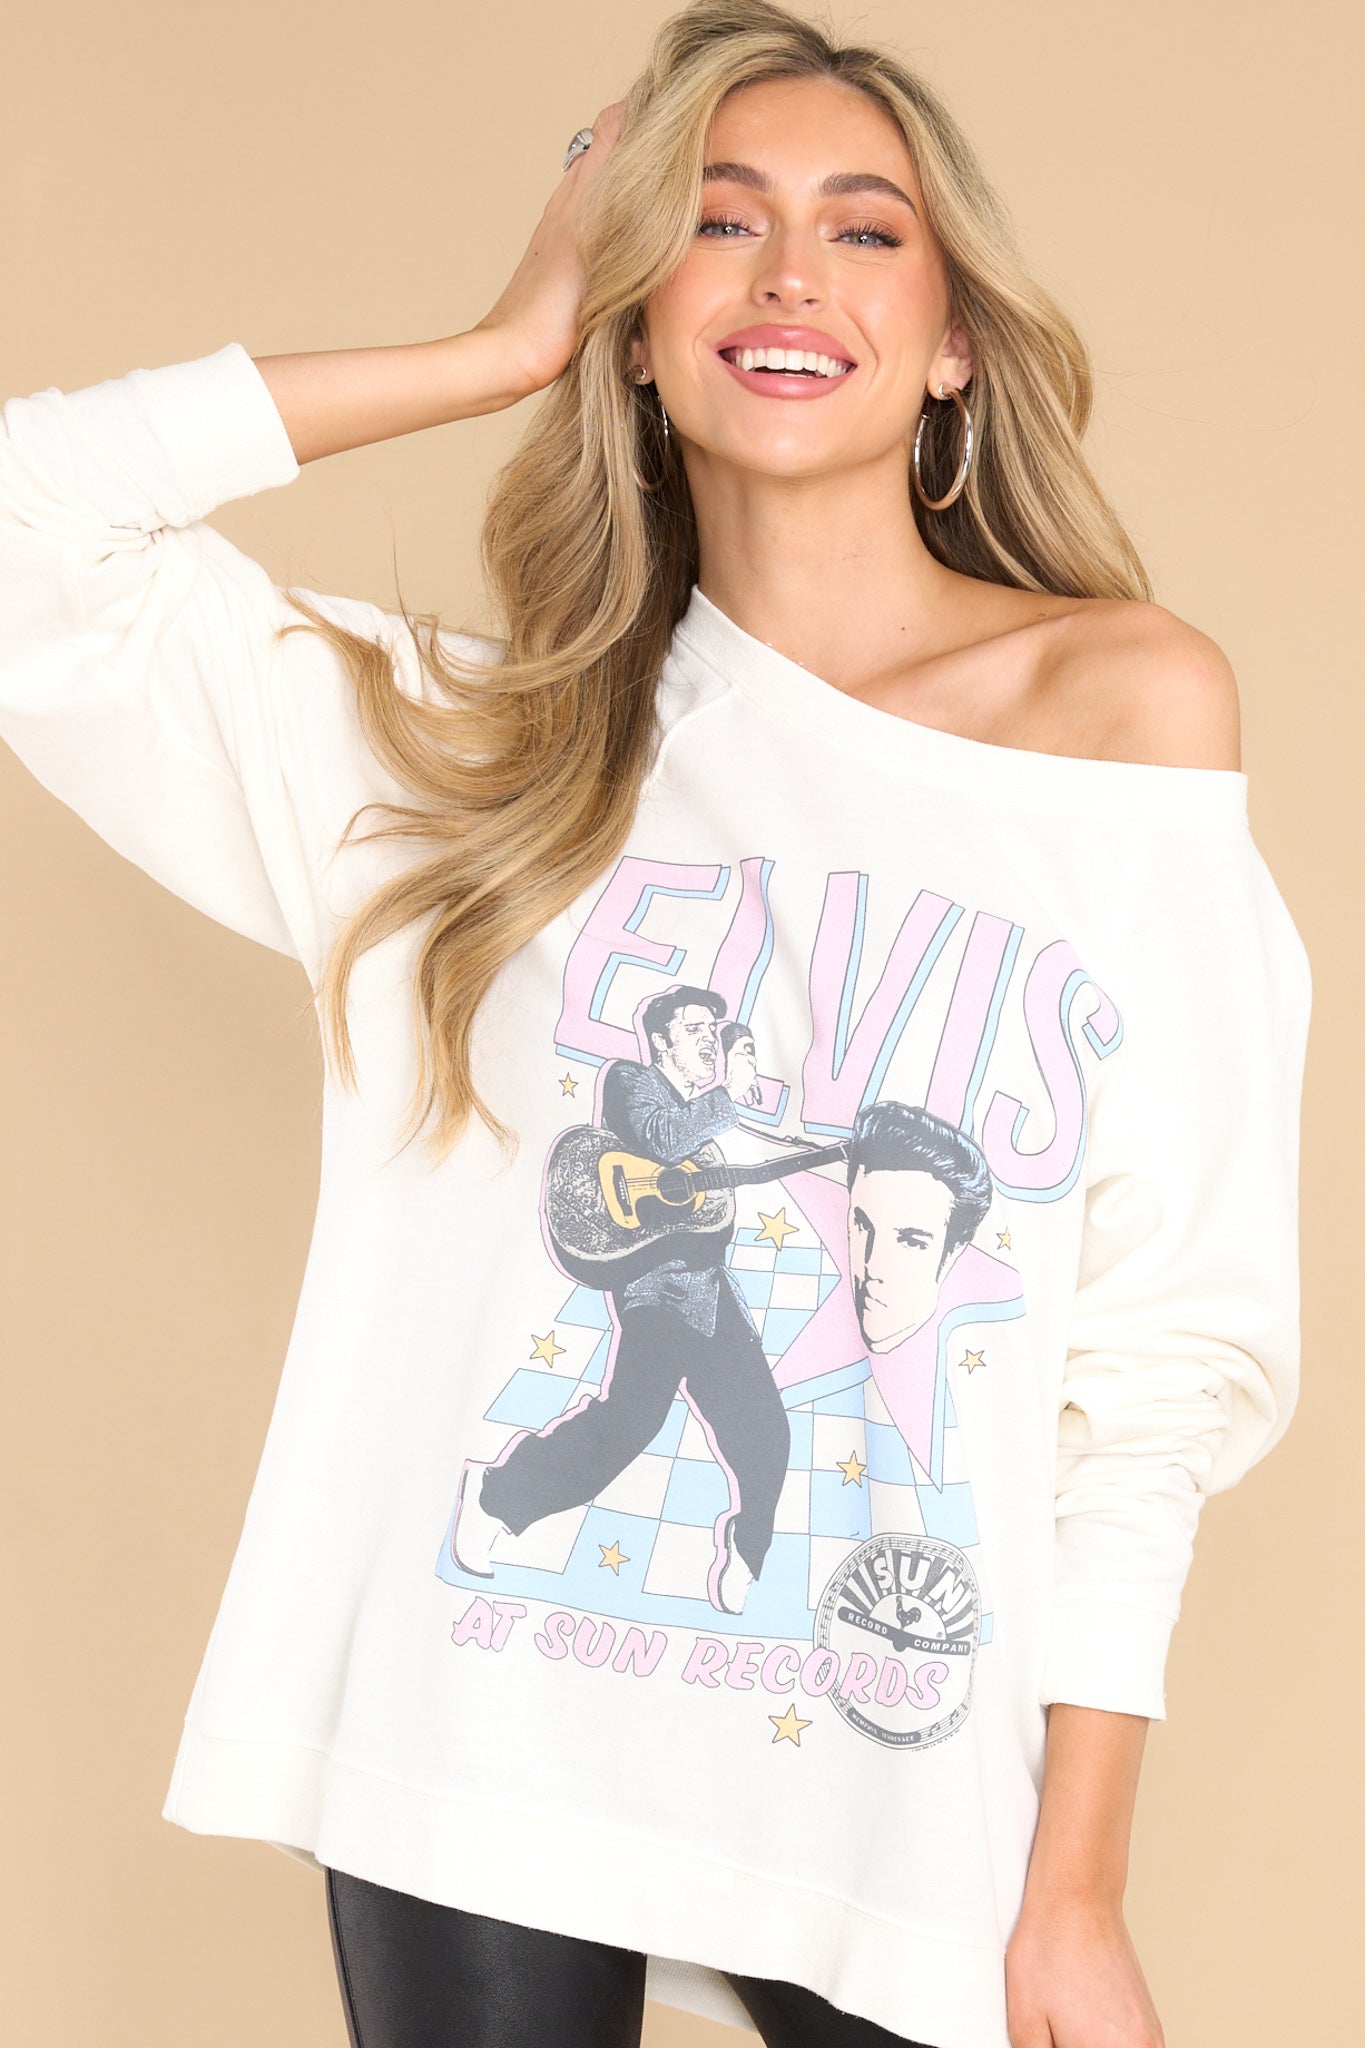 5 Sun Records X Elvis Presley Memphis White Sweatshirt at reddress.com